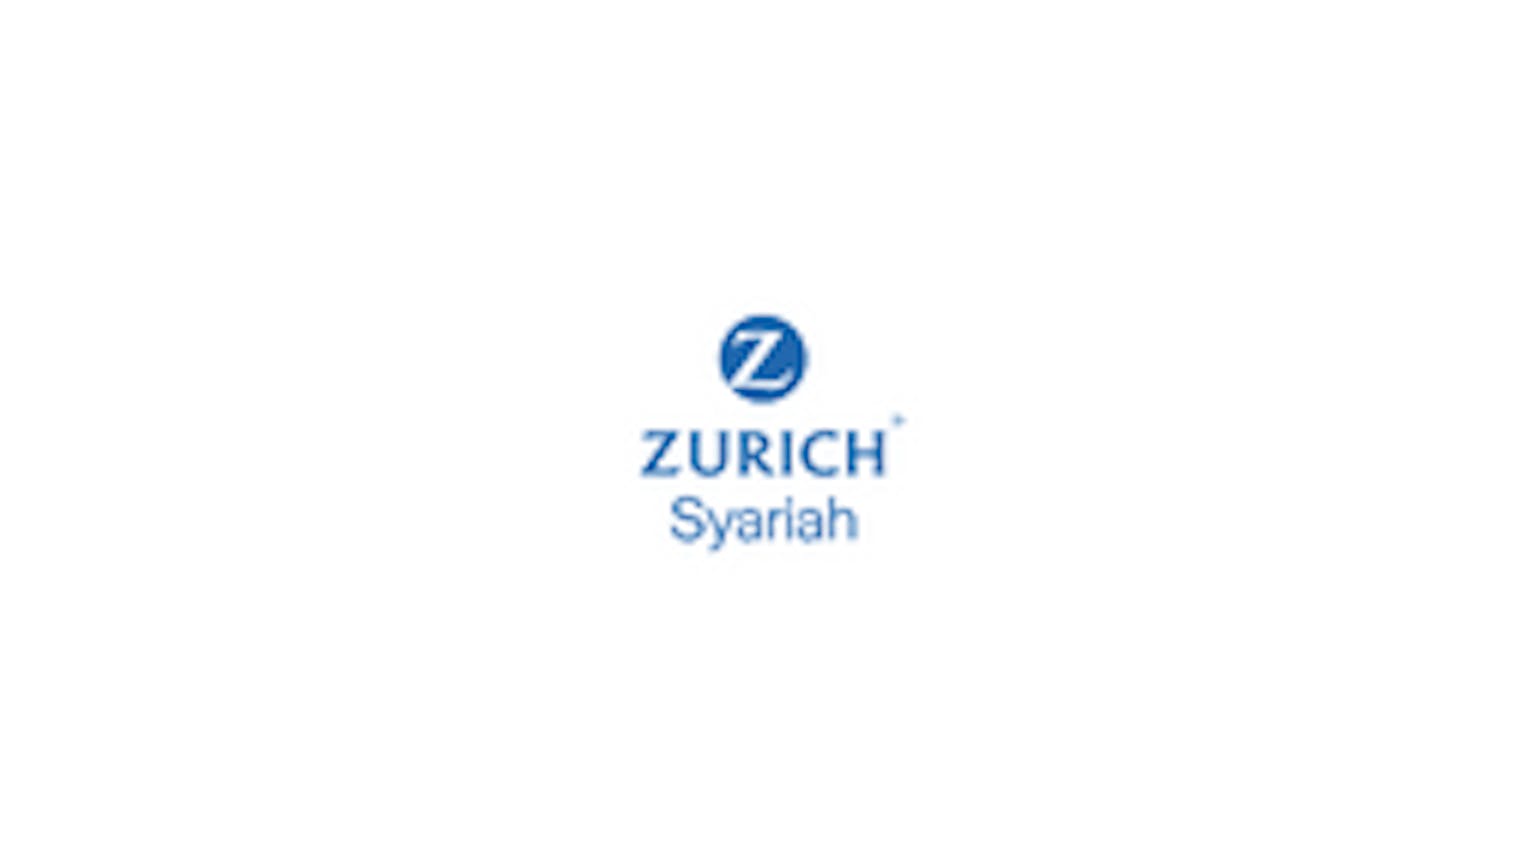 Zurich Syariah